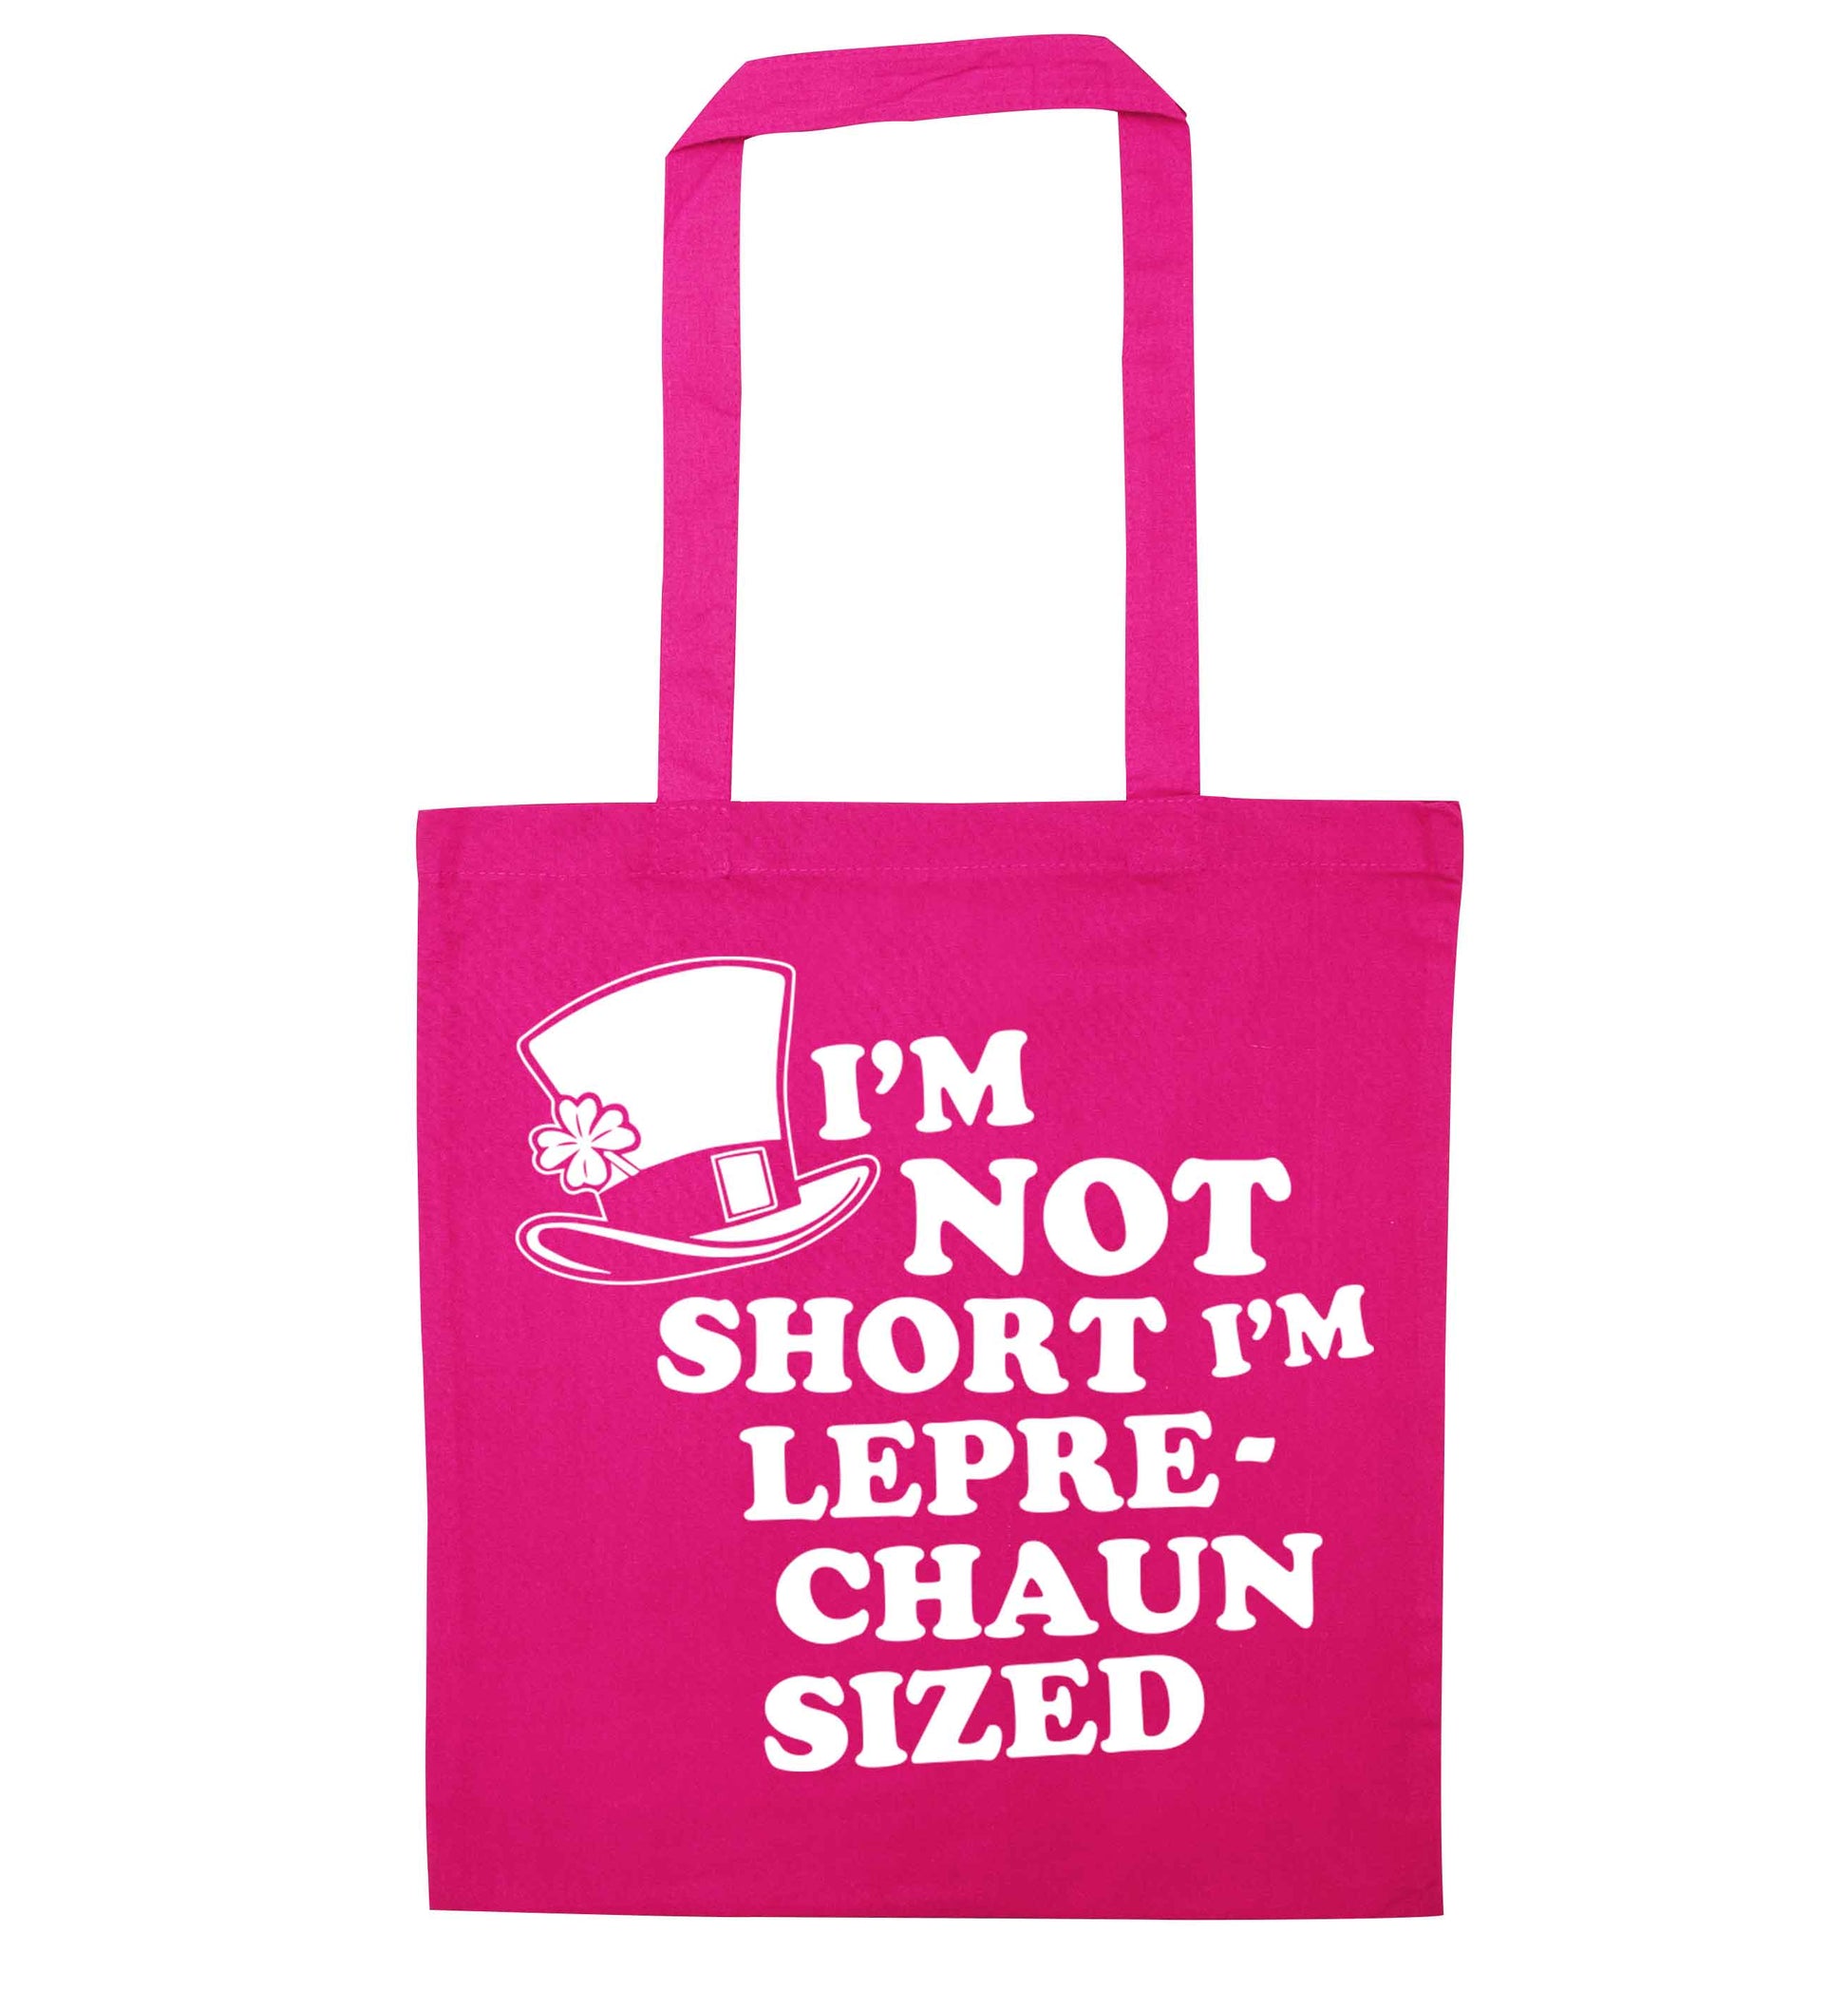 I'm not short I'm leprechaun sized pink tote bag